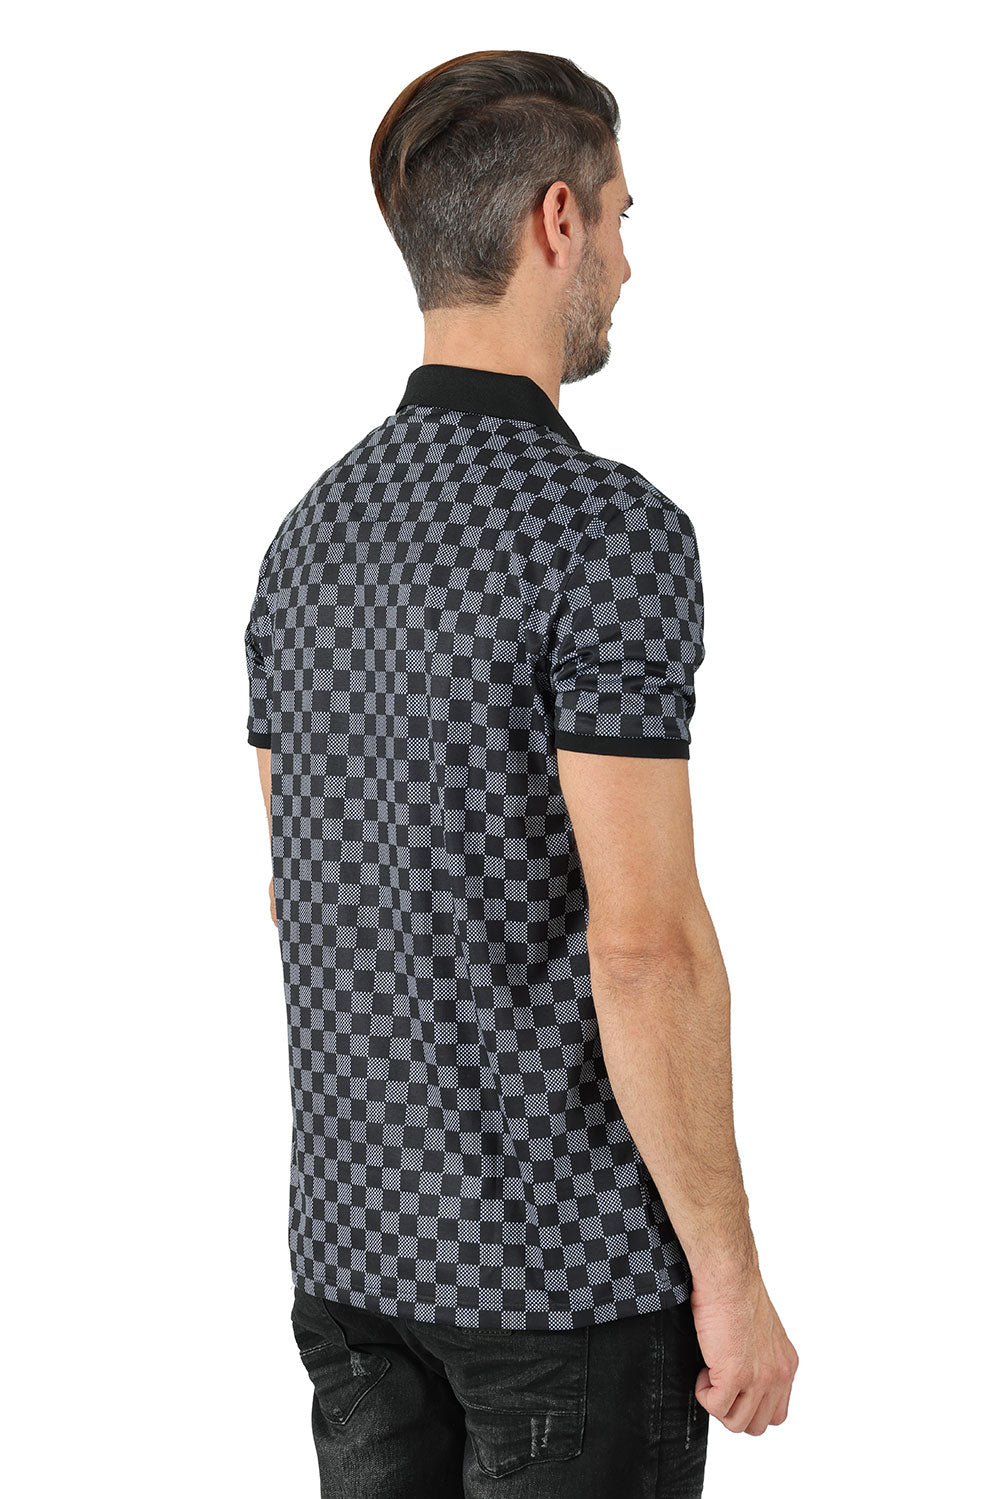 Vassari men's checkered plaid printed short-sleeve polo shirt PSV124 Black